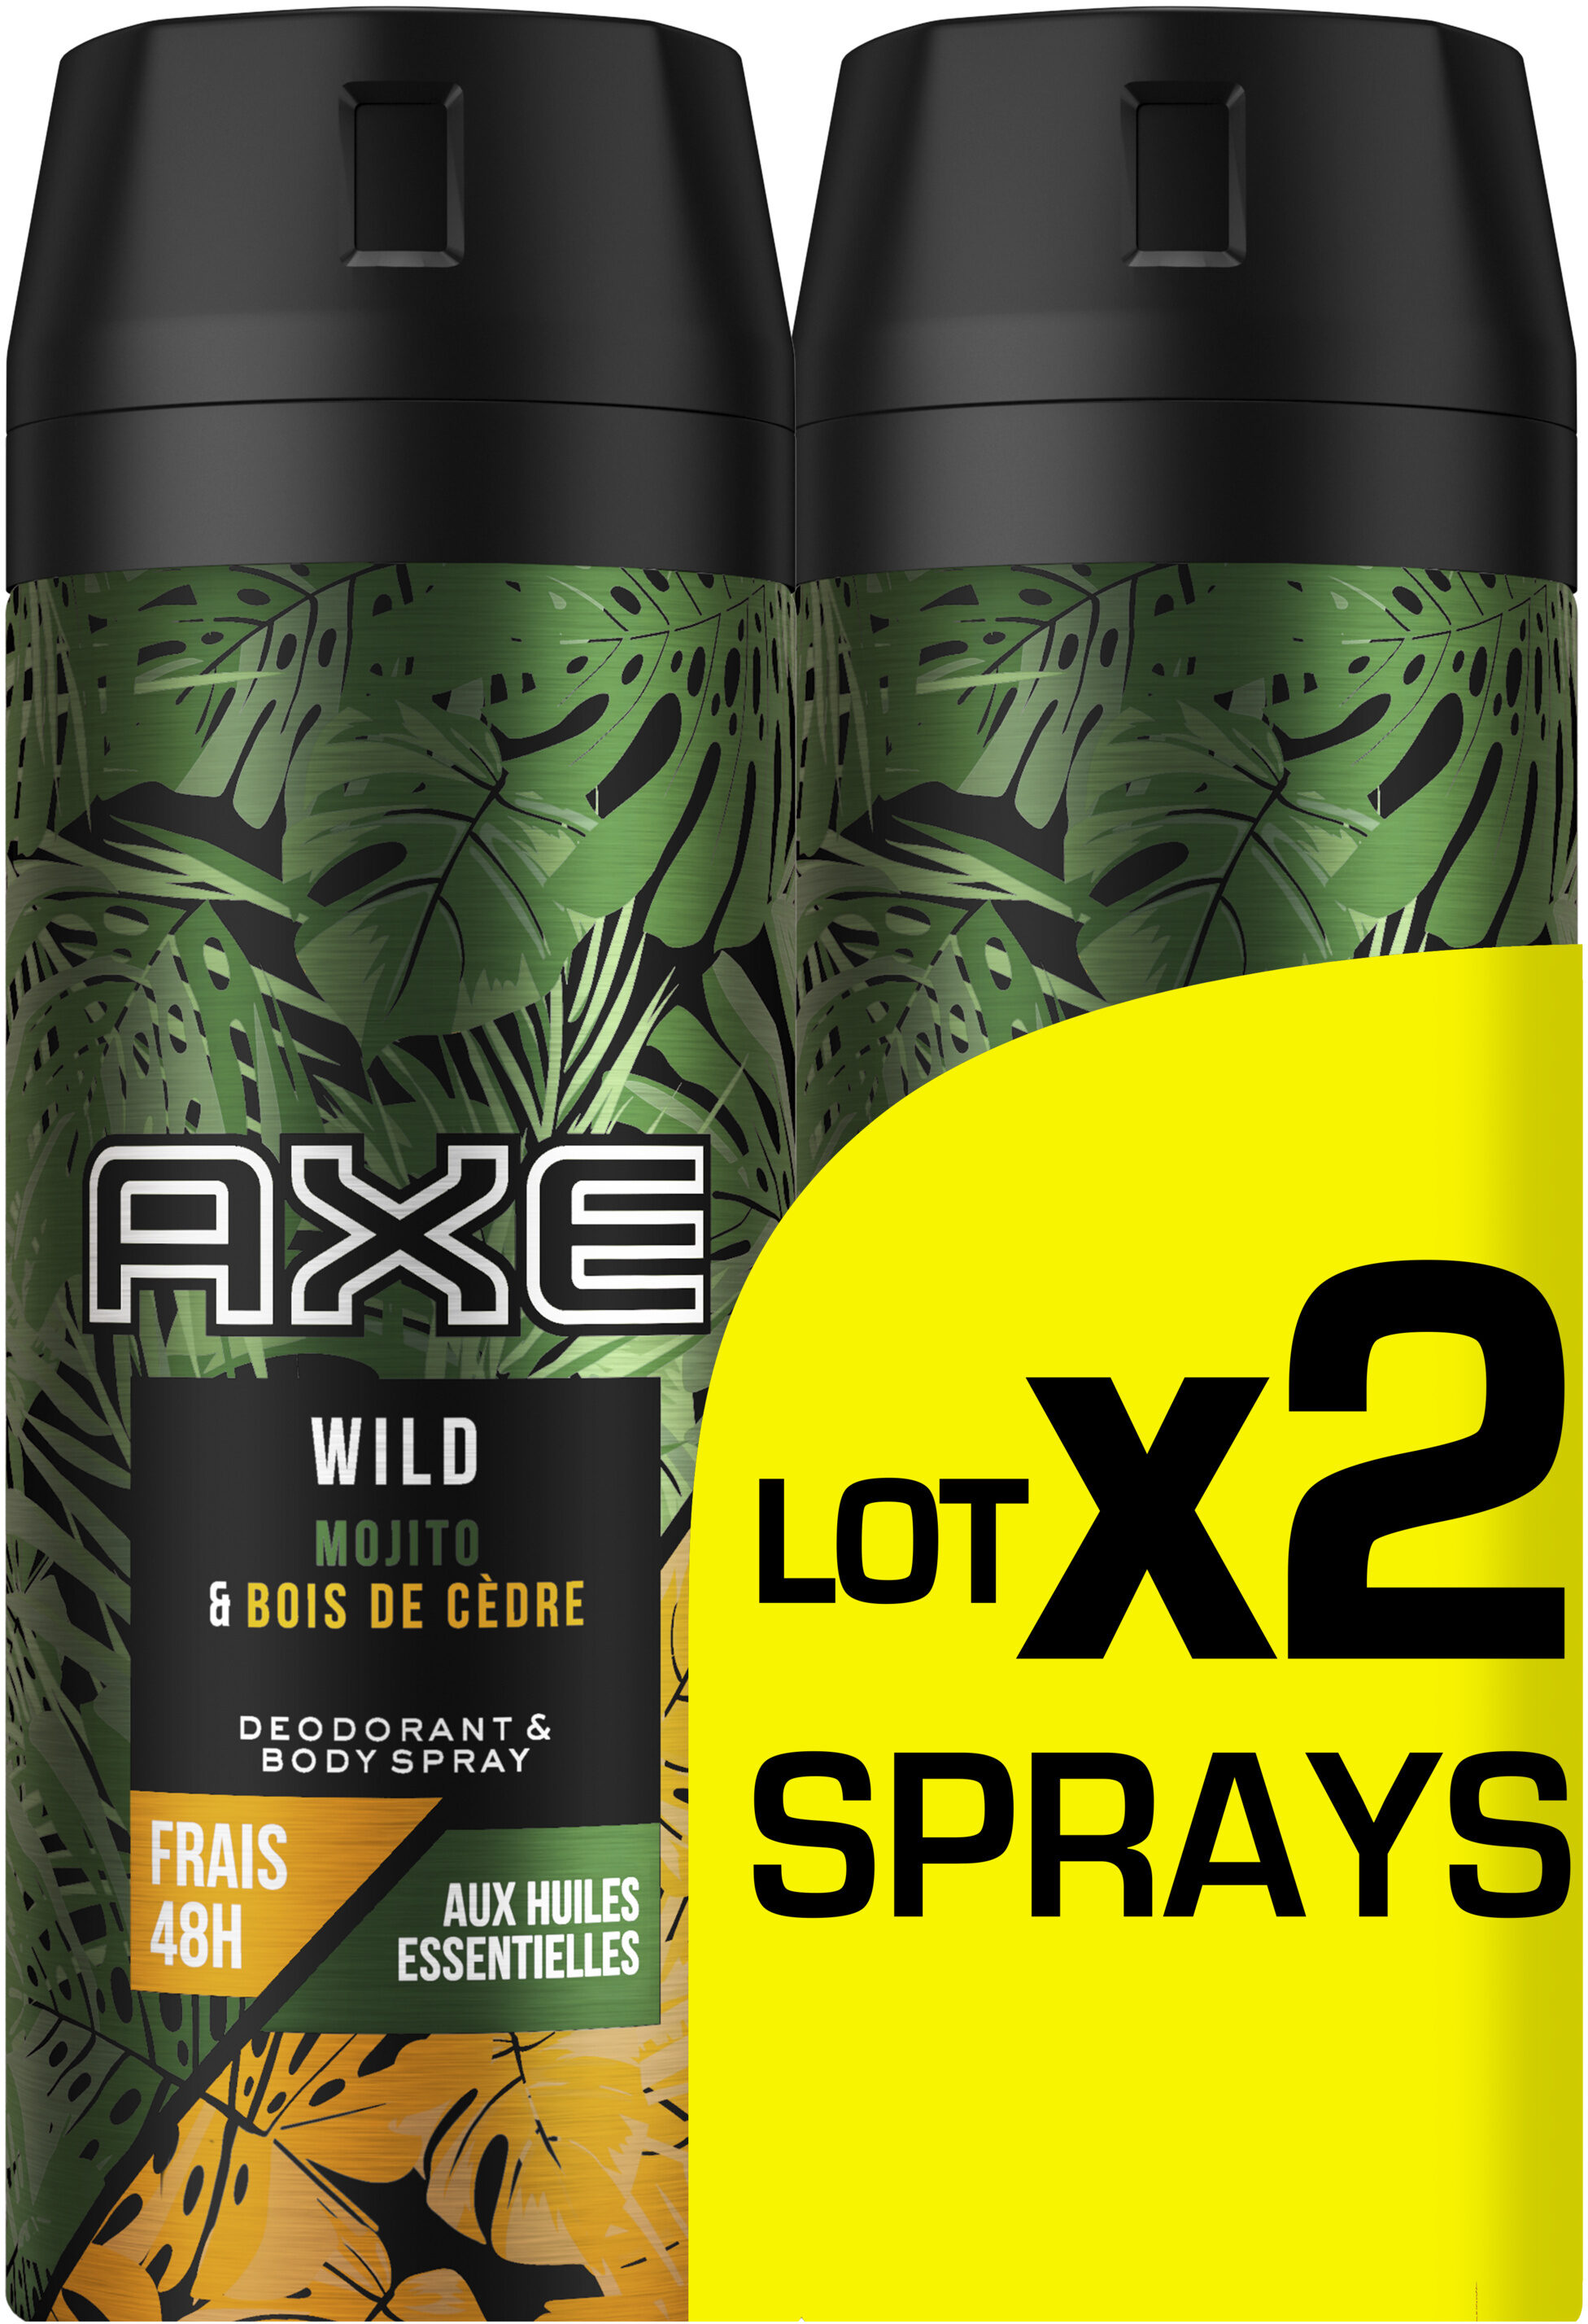 AXE Wild Déodorant Homme Spray Mojito & Bois de Cedre Lot 2 x 150ml - Produit - fr